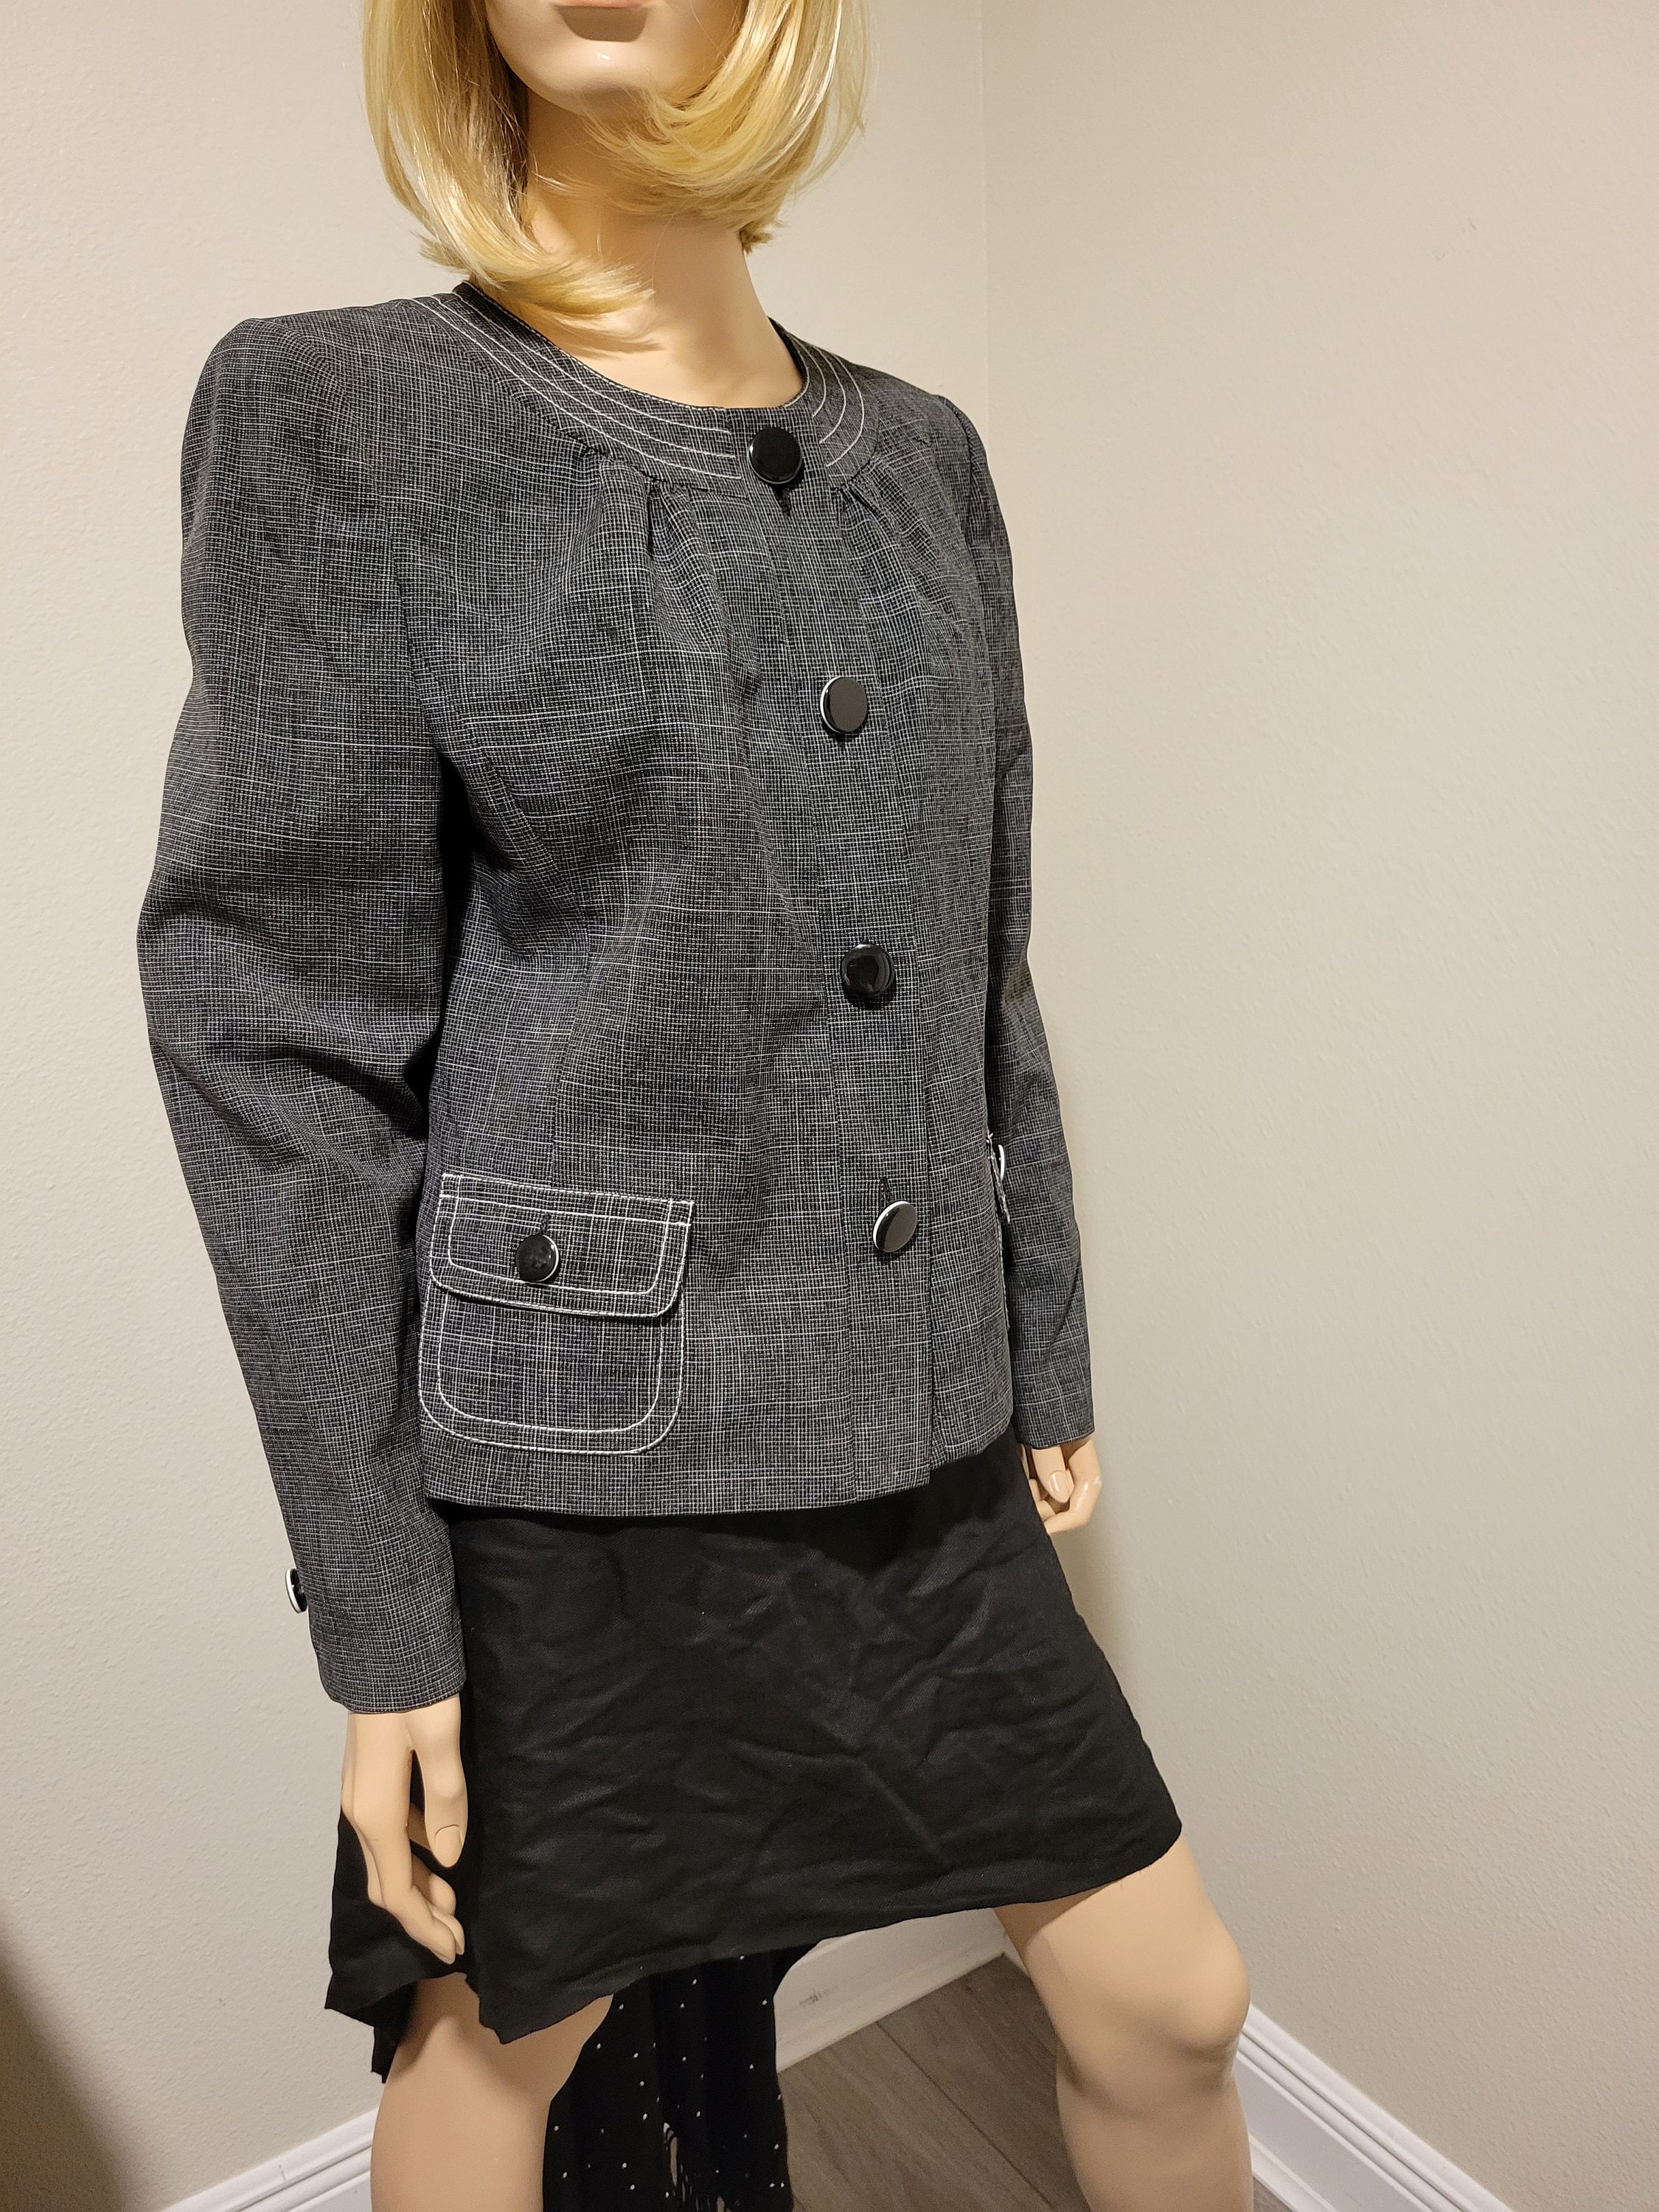 Buy Career Women Size 10 Kasper Jacket Blazer Genuine Vintage Over Coat  1980s Medium Excellent Condition Grey Color Online in India 